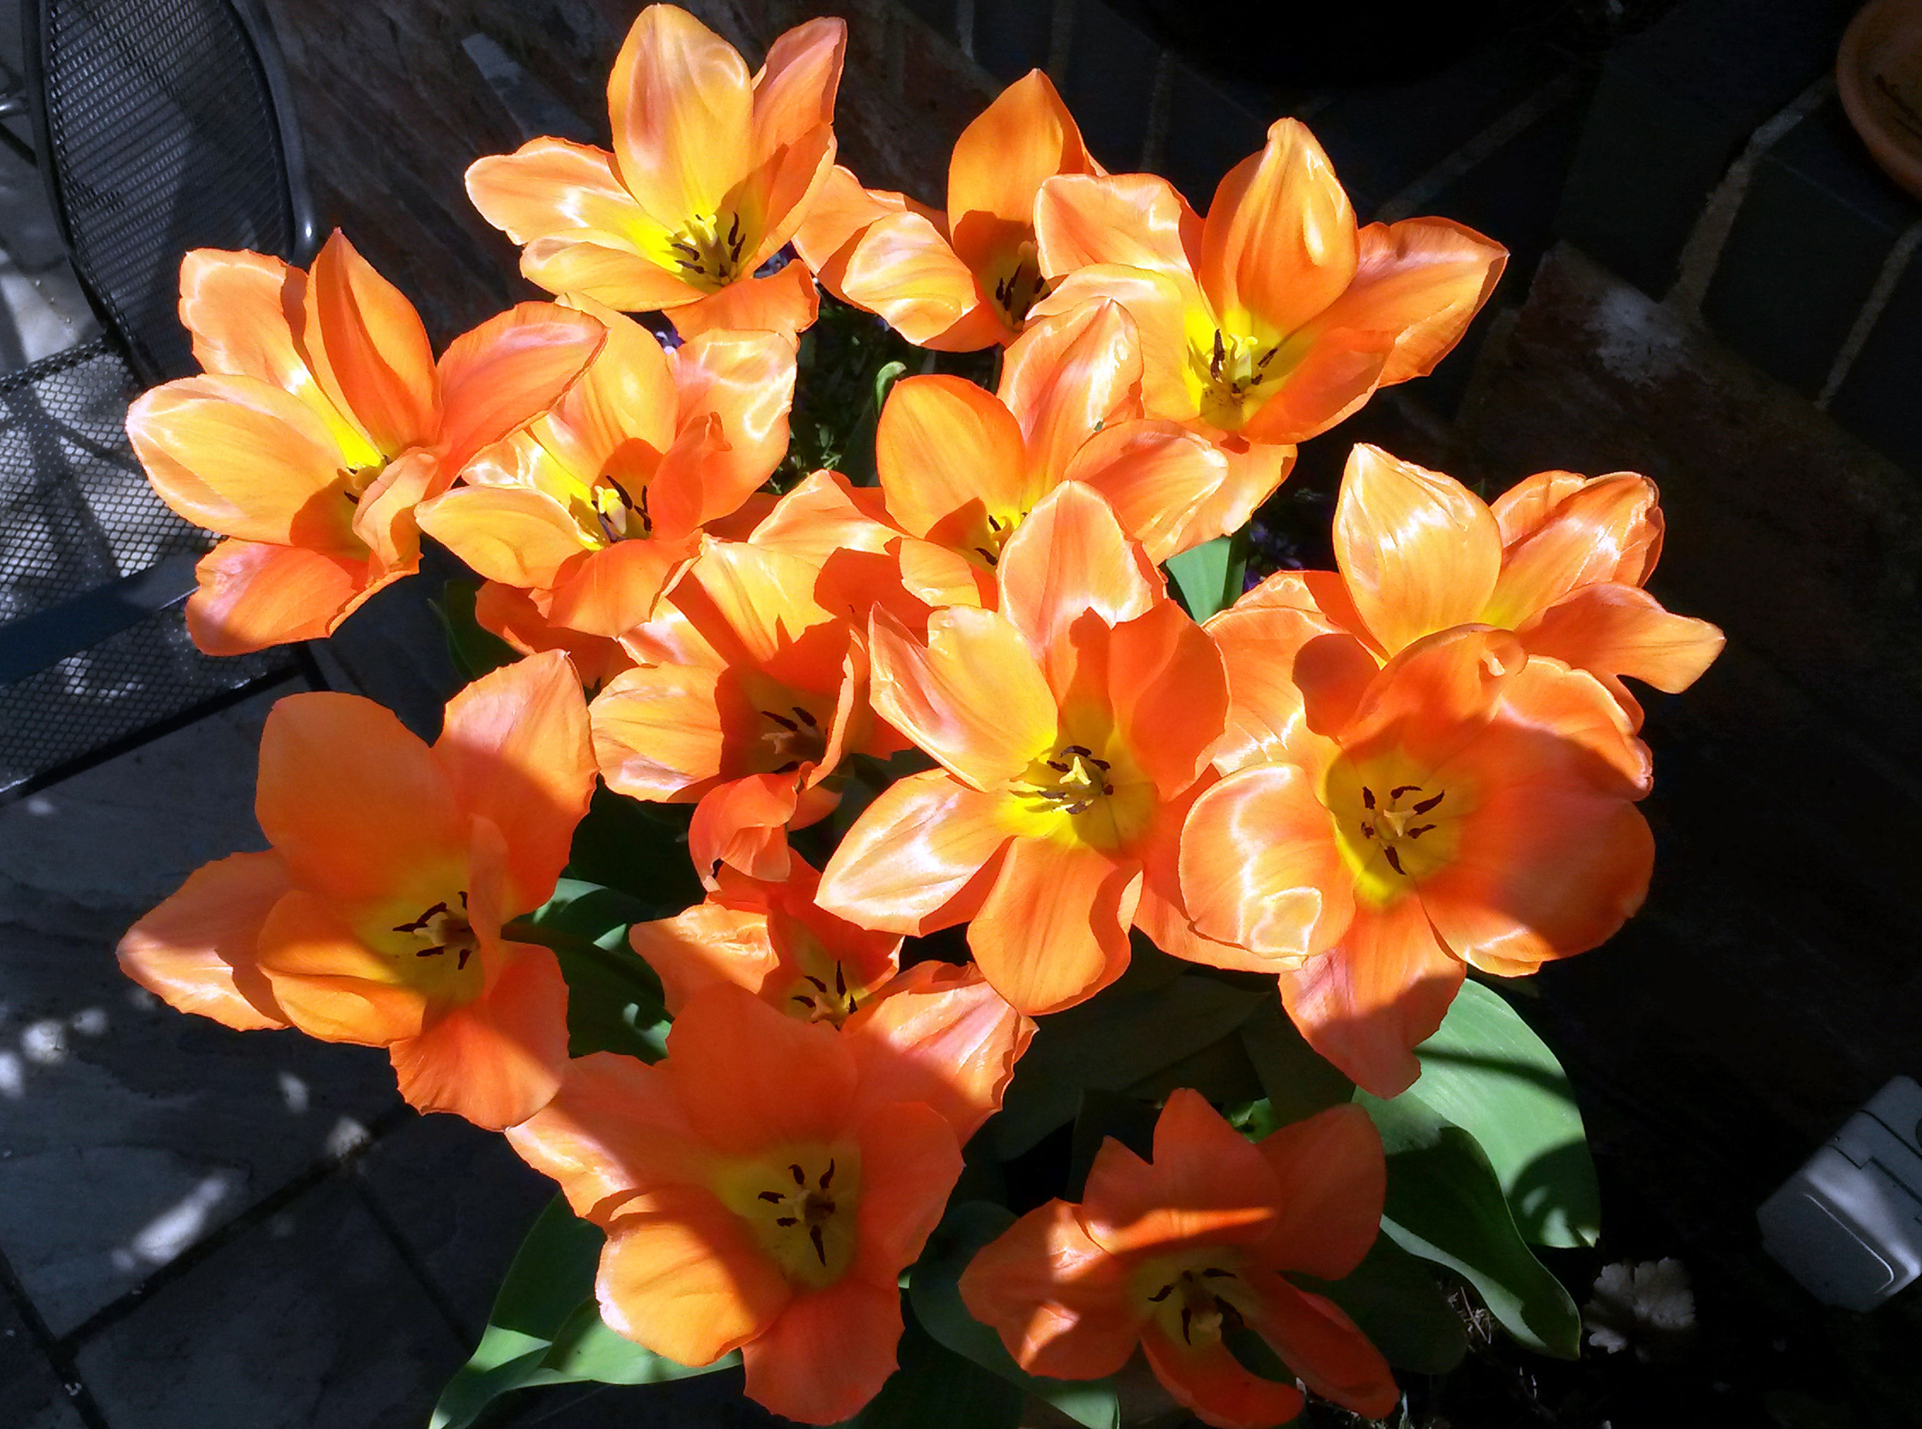 Orange tulips will add spring colour. (Hannah Stephenson/PA)